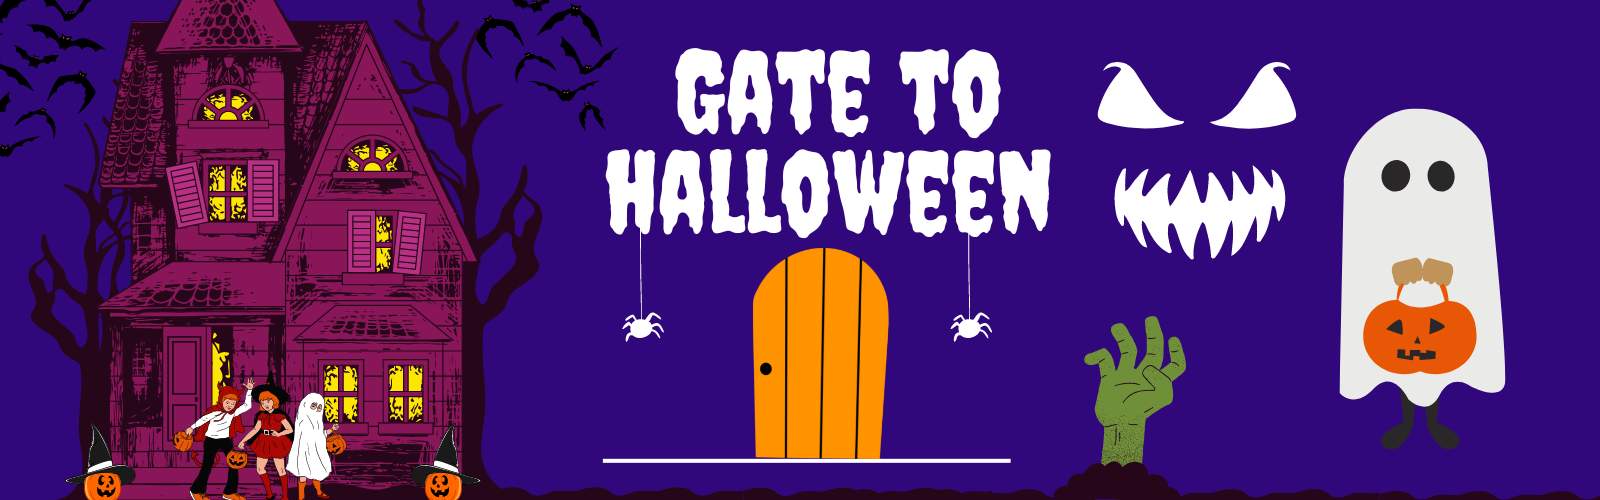 Gate to Halloween